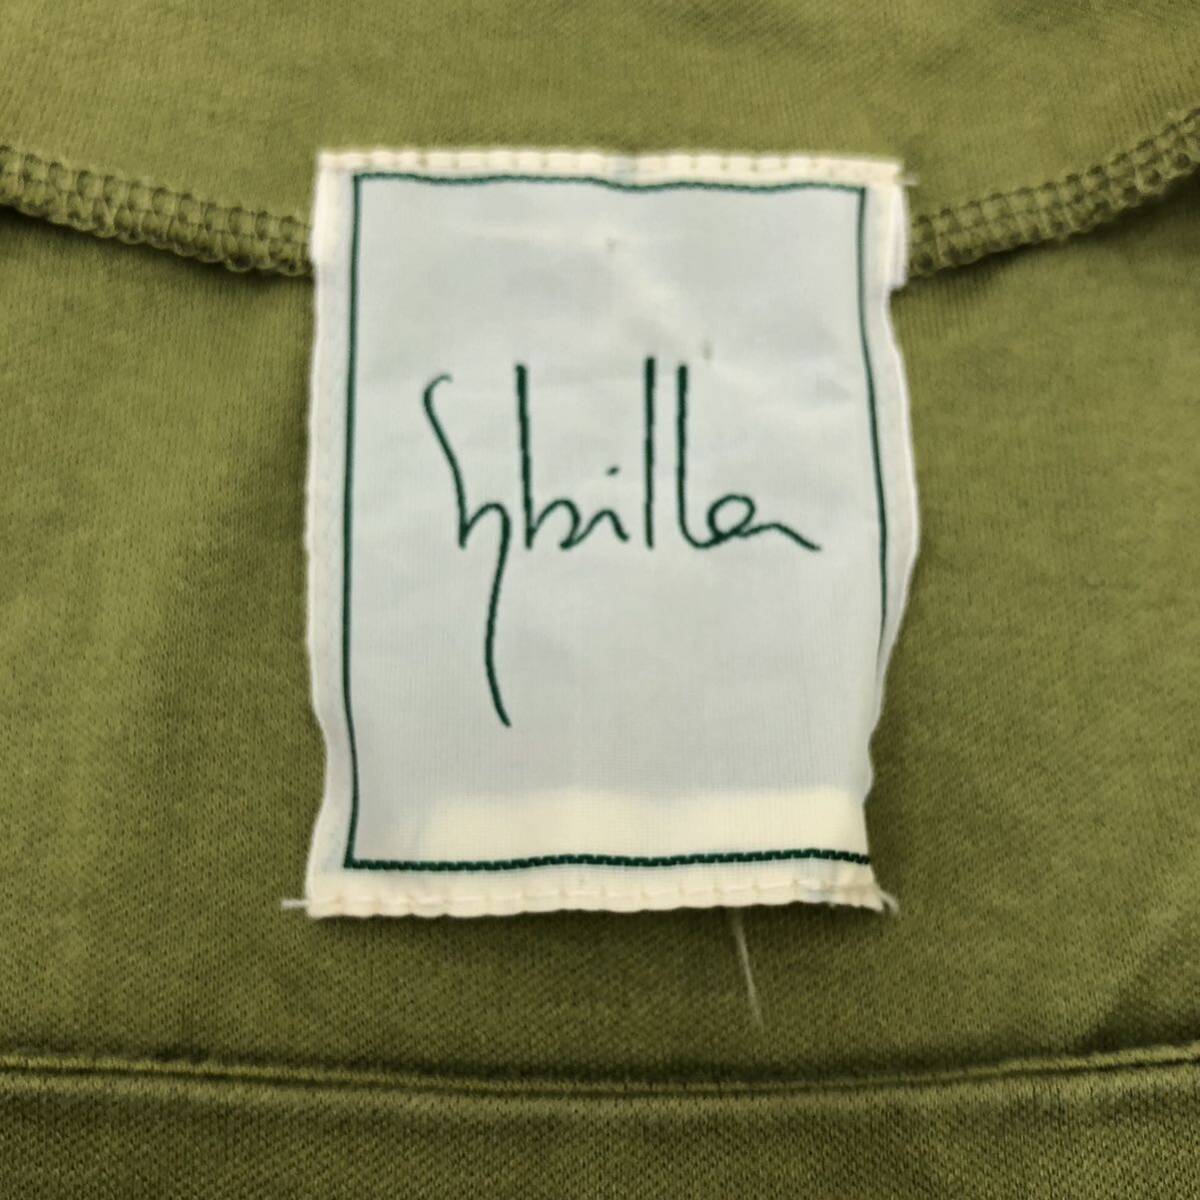 NB223-40 Sybilla シビラ カットソー シャツ トップス 五分袖 刺繍 コットン 100% グリーン系 花柄 レディース M_画像8